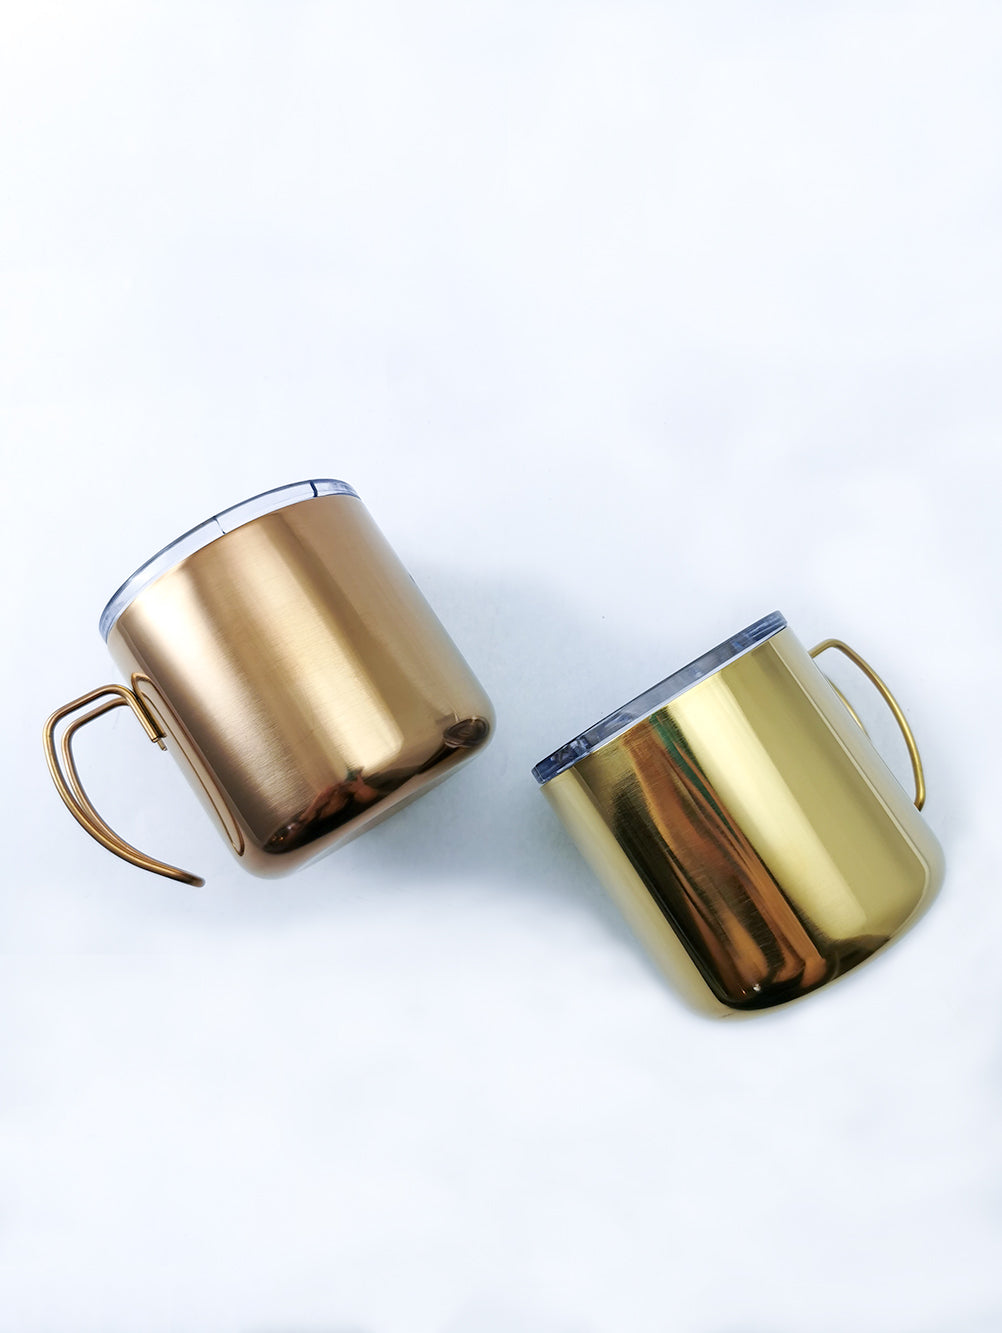 BREU Coffee Mug - Double Wall 304 Stainless Steel Coffee Mug - Rose Gold - Gifts by Art Tree